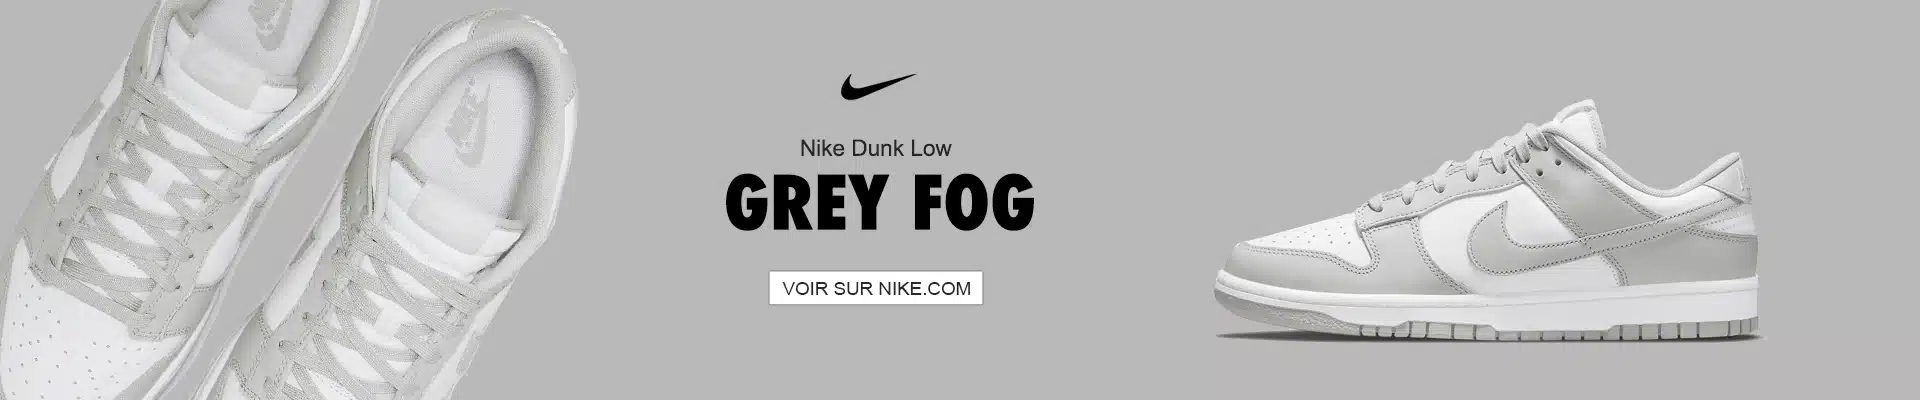 Minor Defect Nike Air Max Intrlk Lite Both Feet Grey Fog